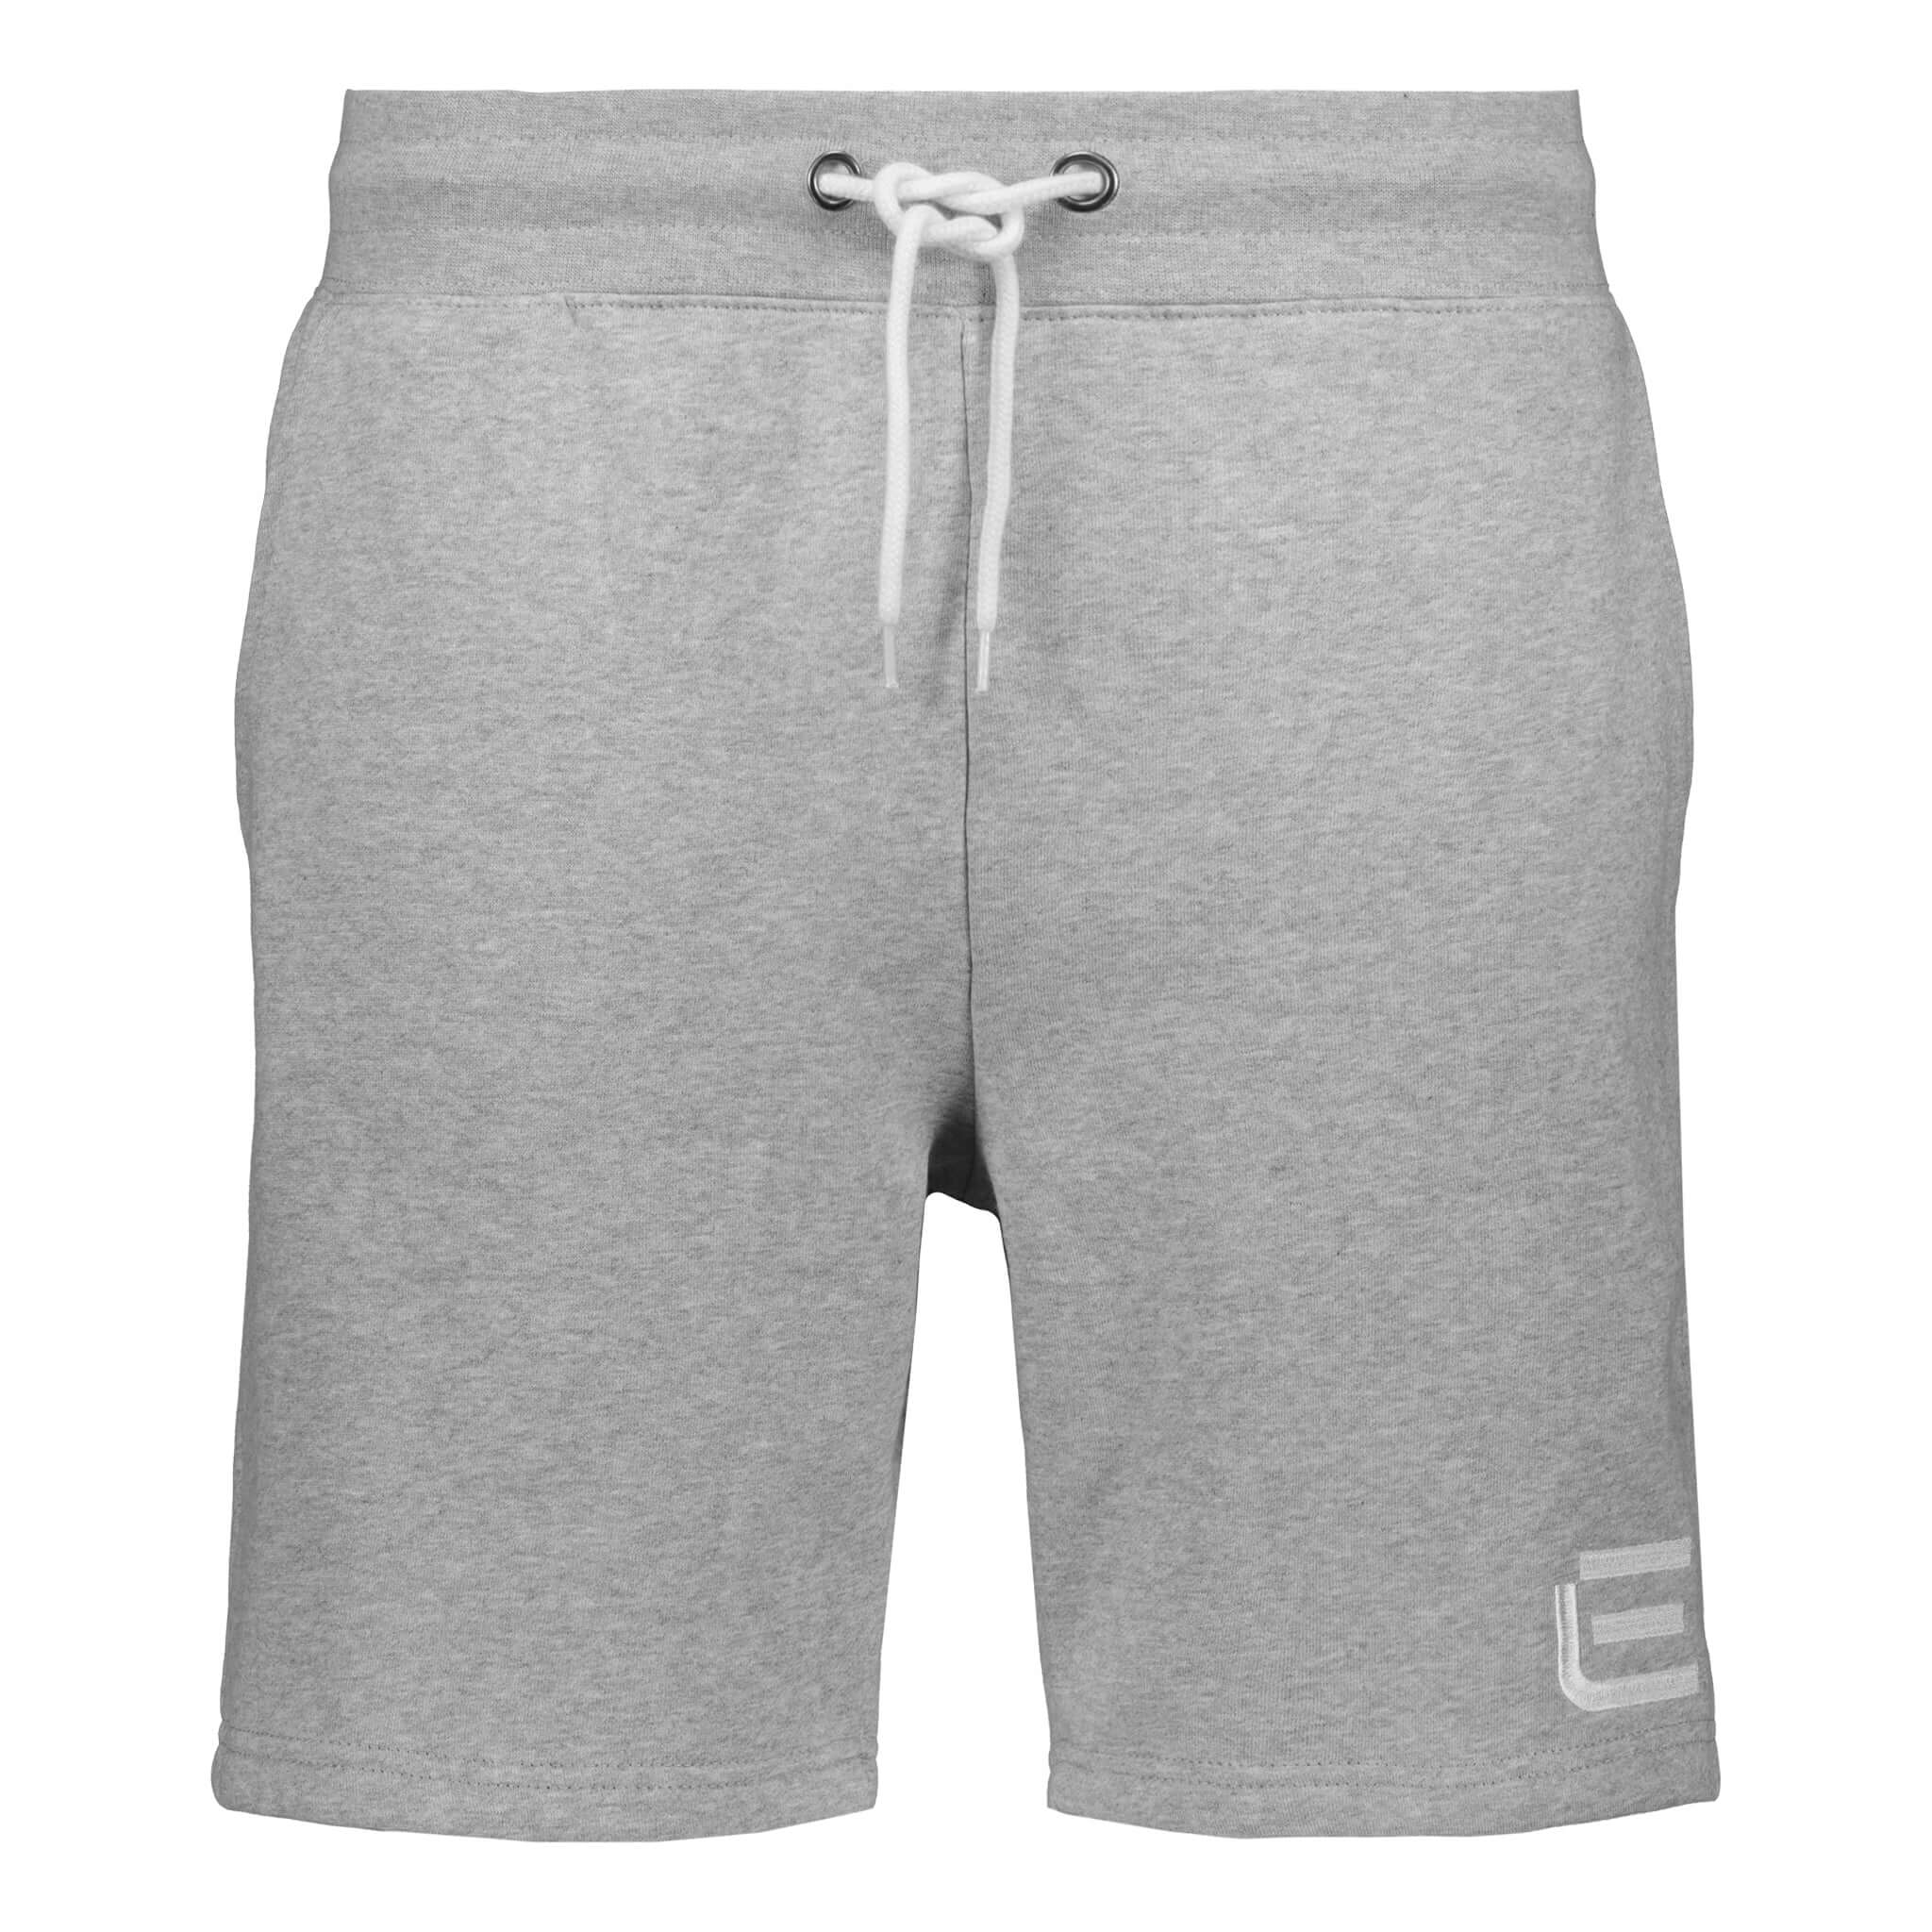 ENCE Sweatshorts Grey